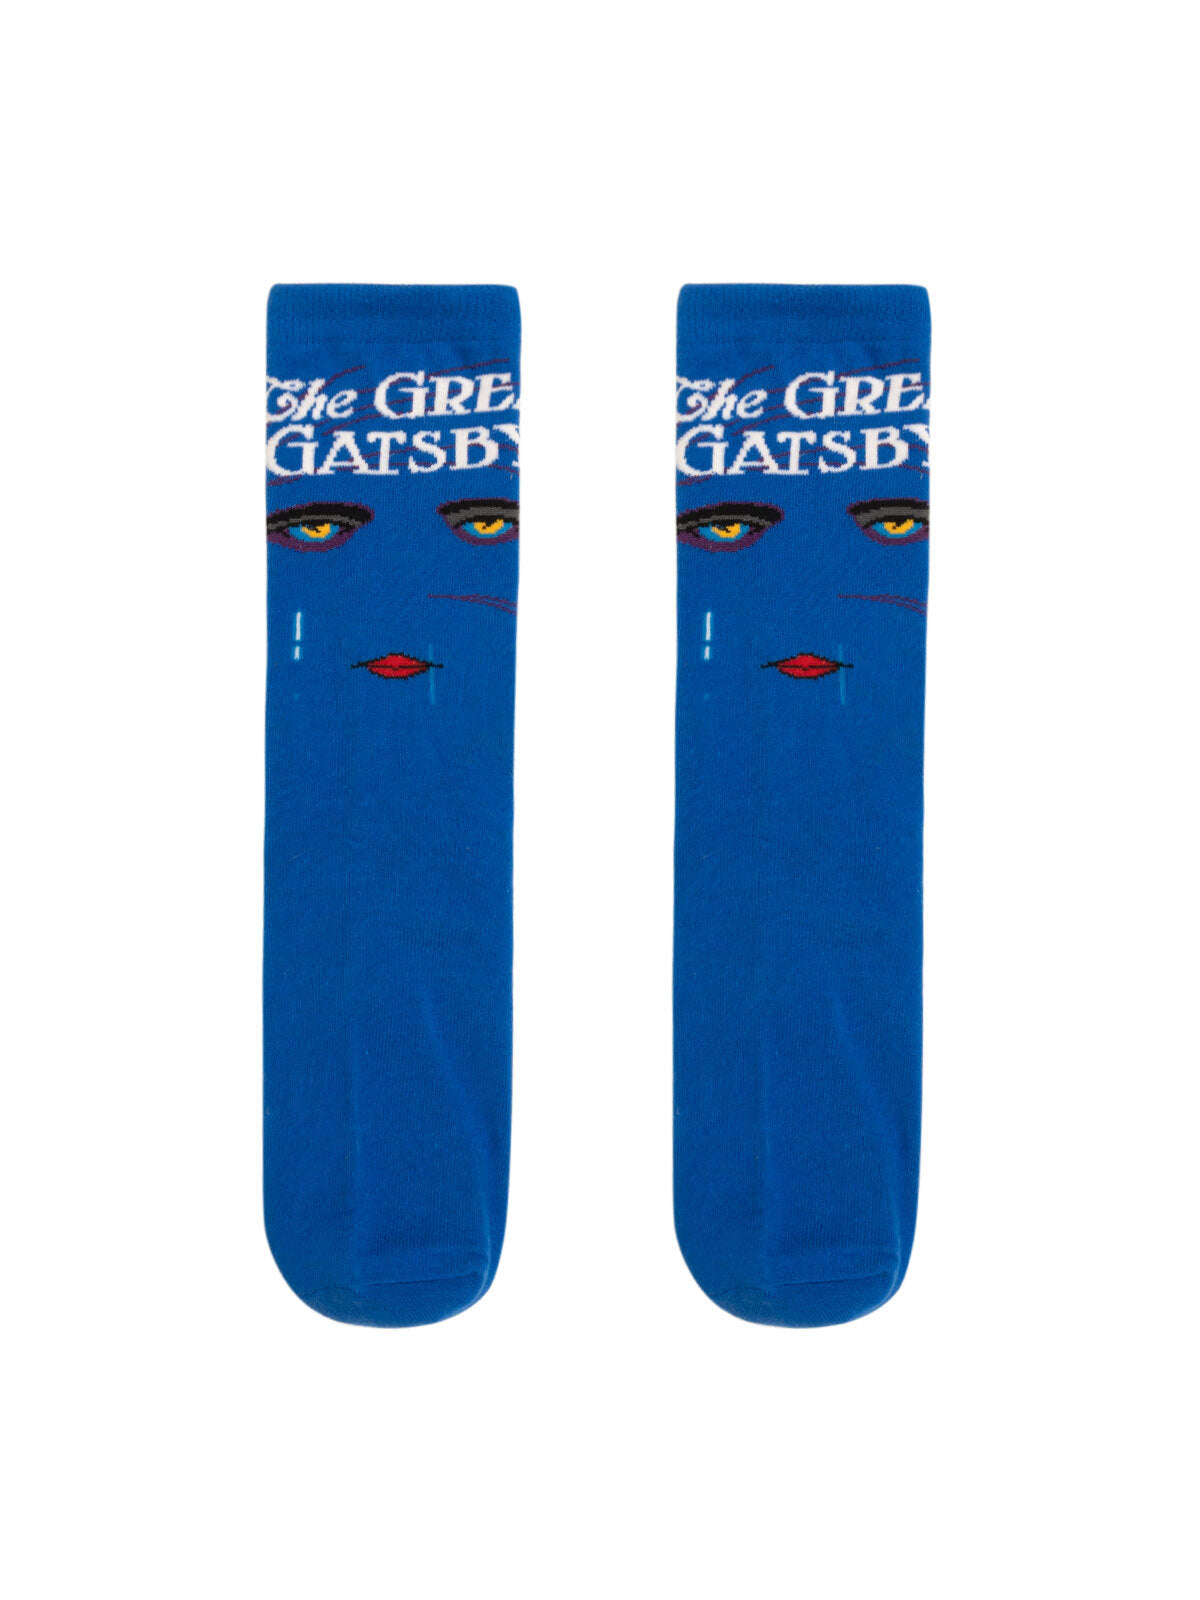 https://cdn.shopify.com/s/files/1/0380/6785/products/SOCKS-1089_the-great-gatsby-socks_02.jpg?v=1616953241